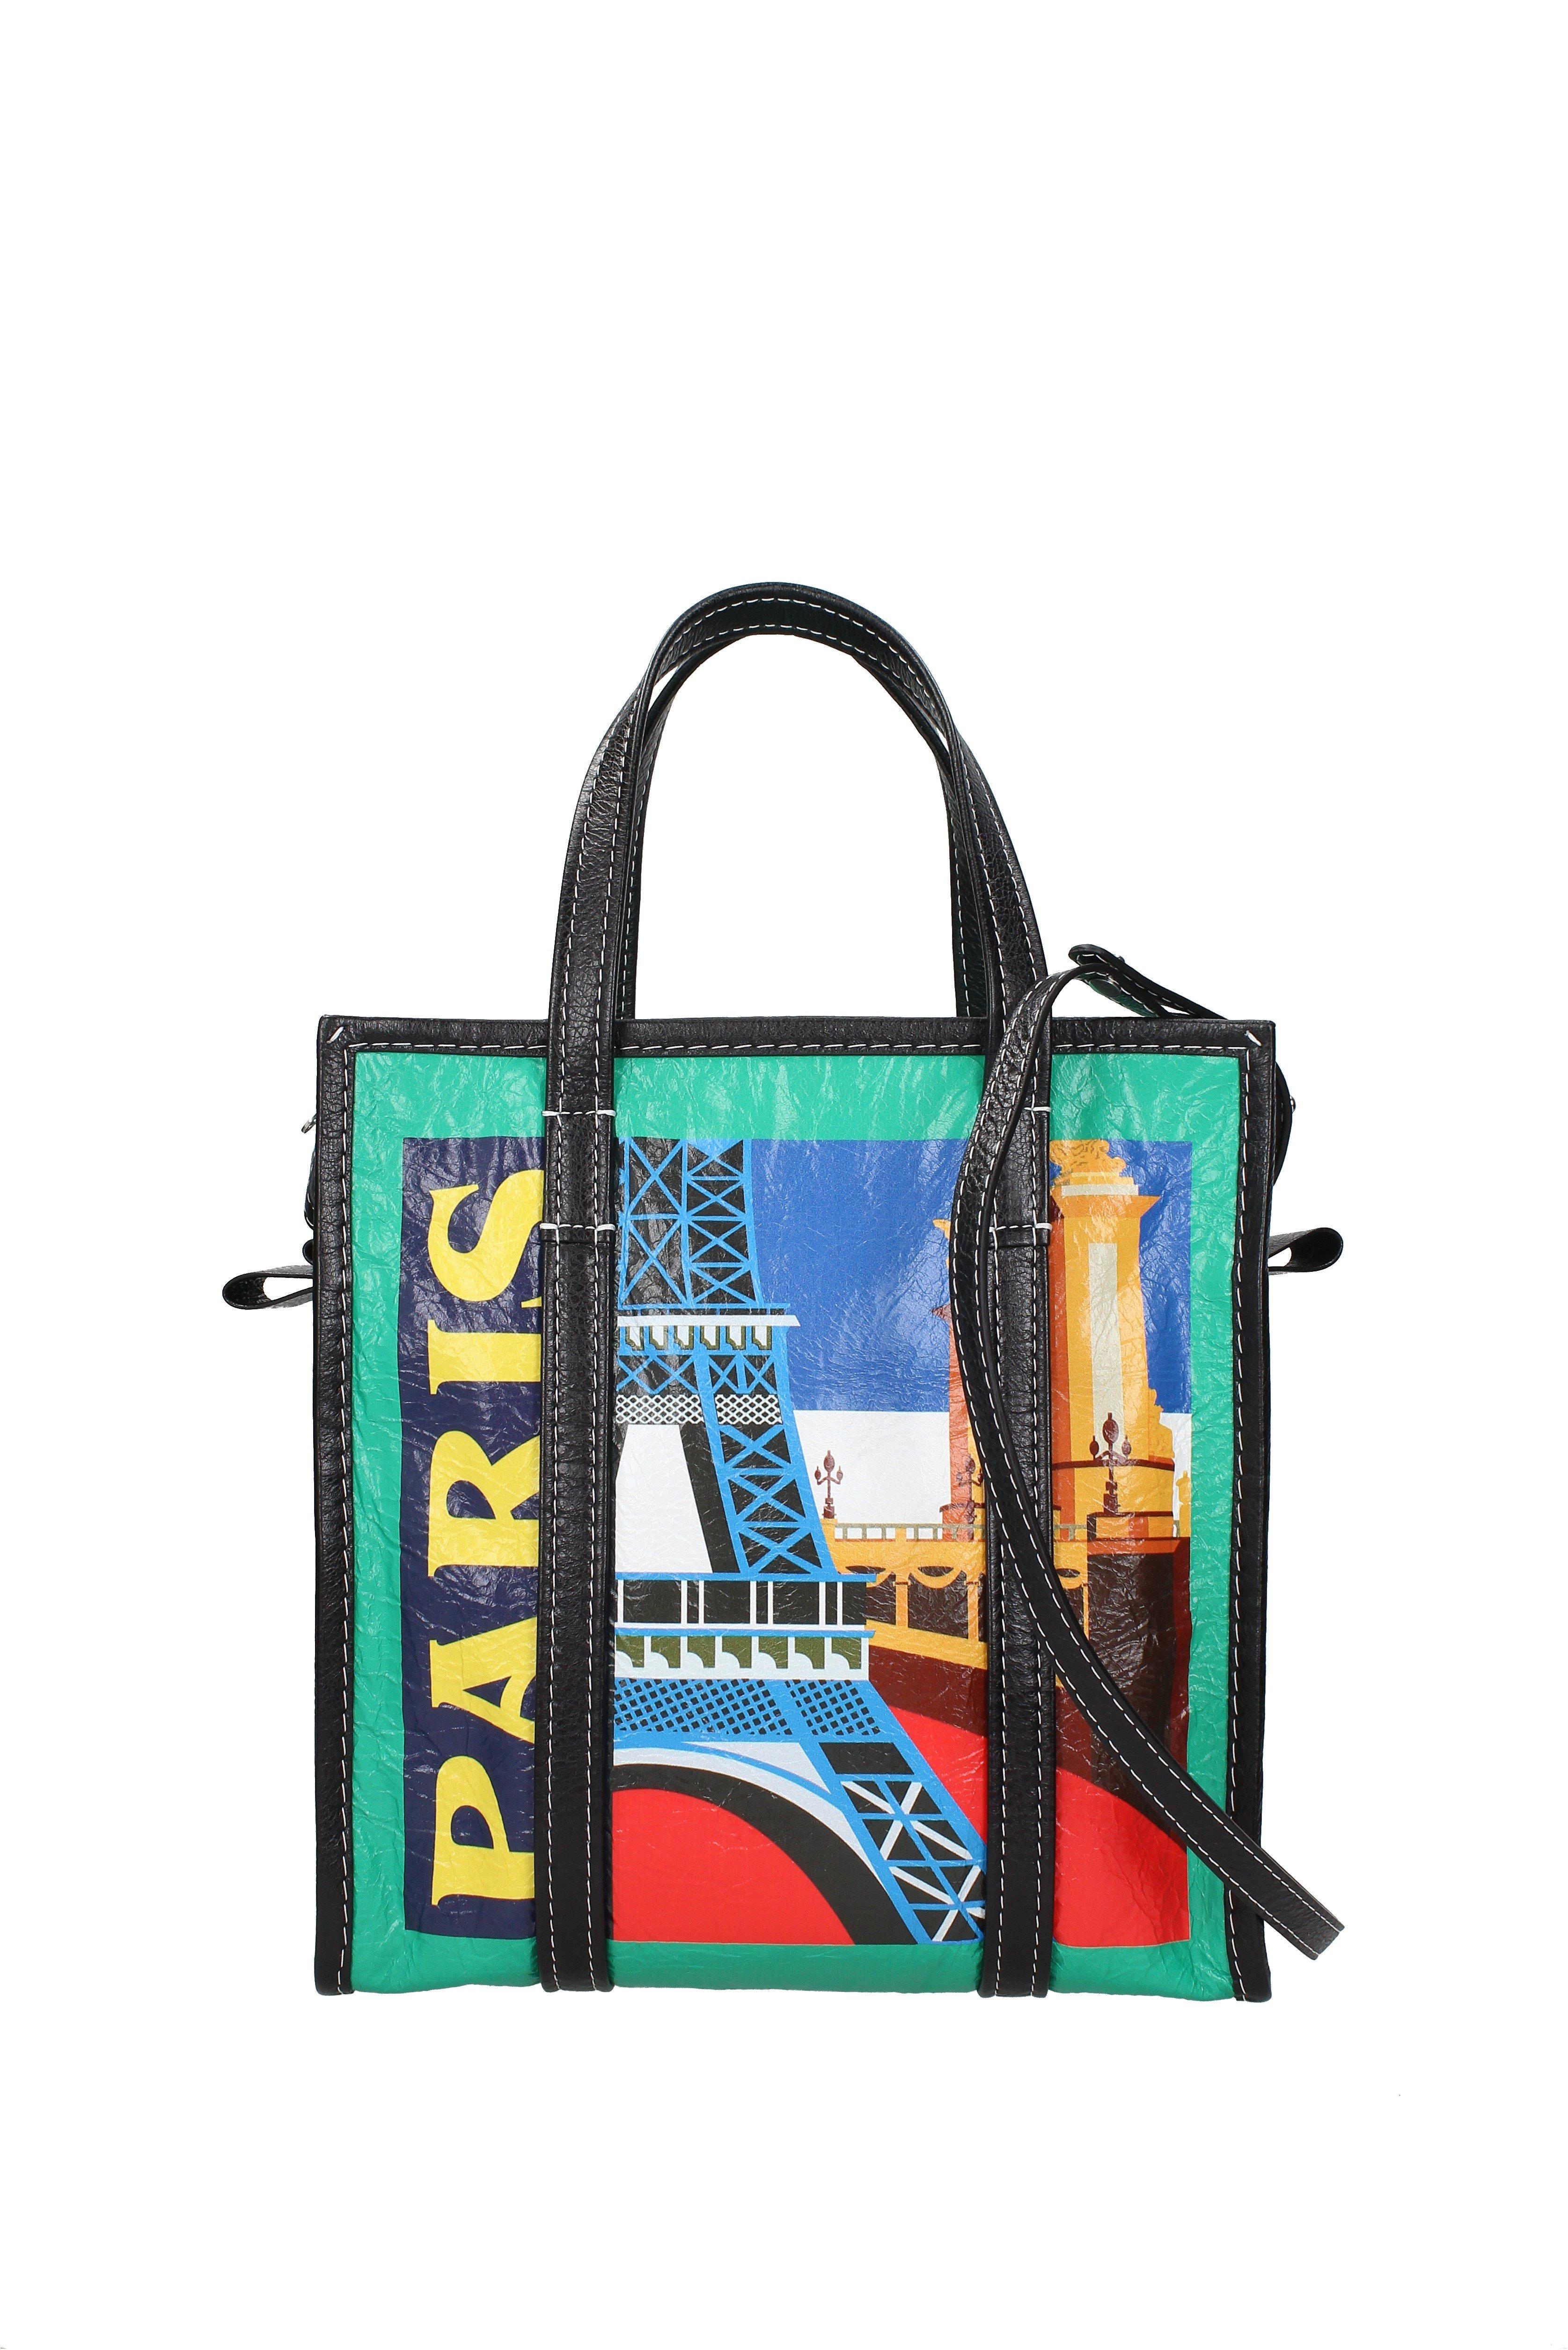 Uovertruffen Tom Audreath Penneven Balenciaga Bazar Paris Printed Leather Shopper in Green - Lyst